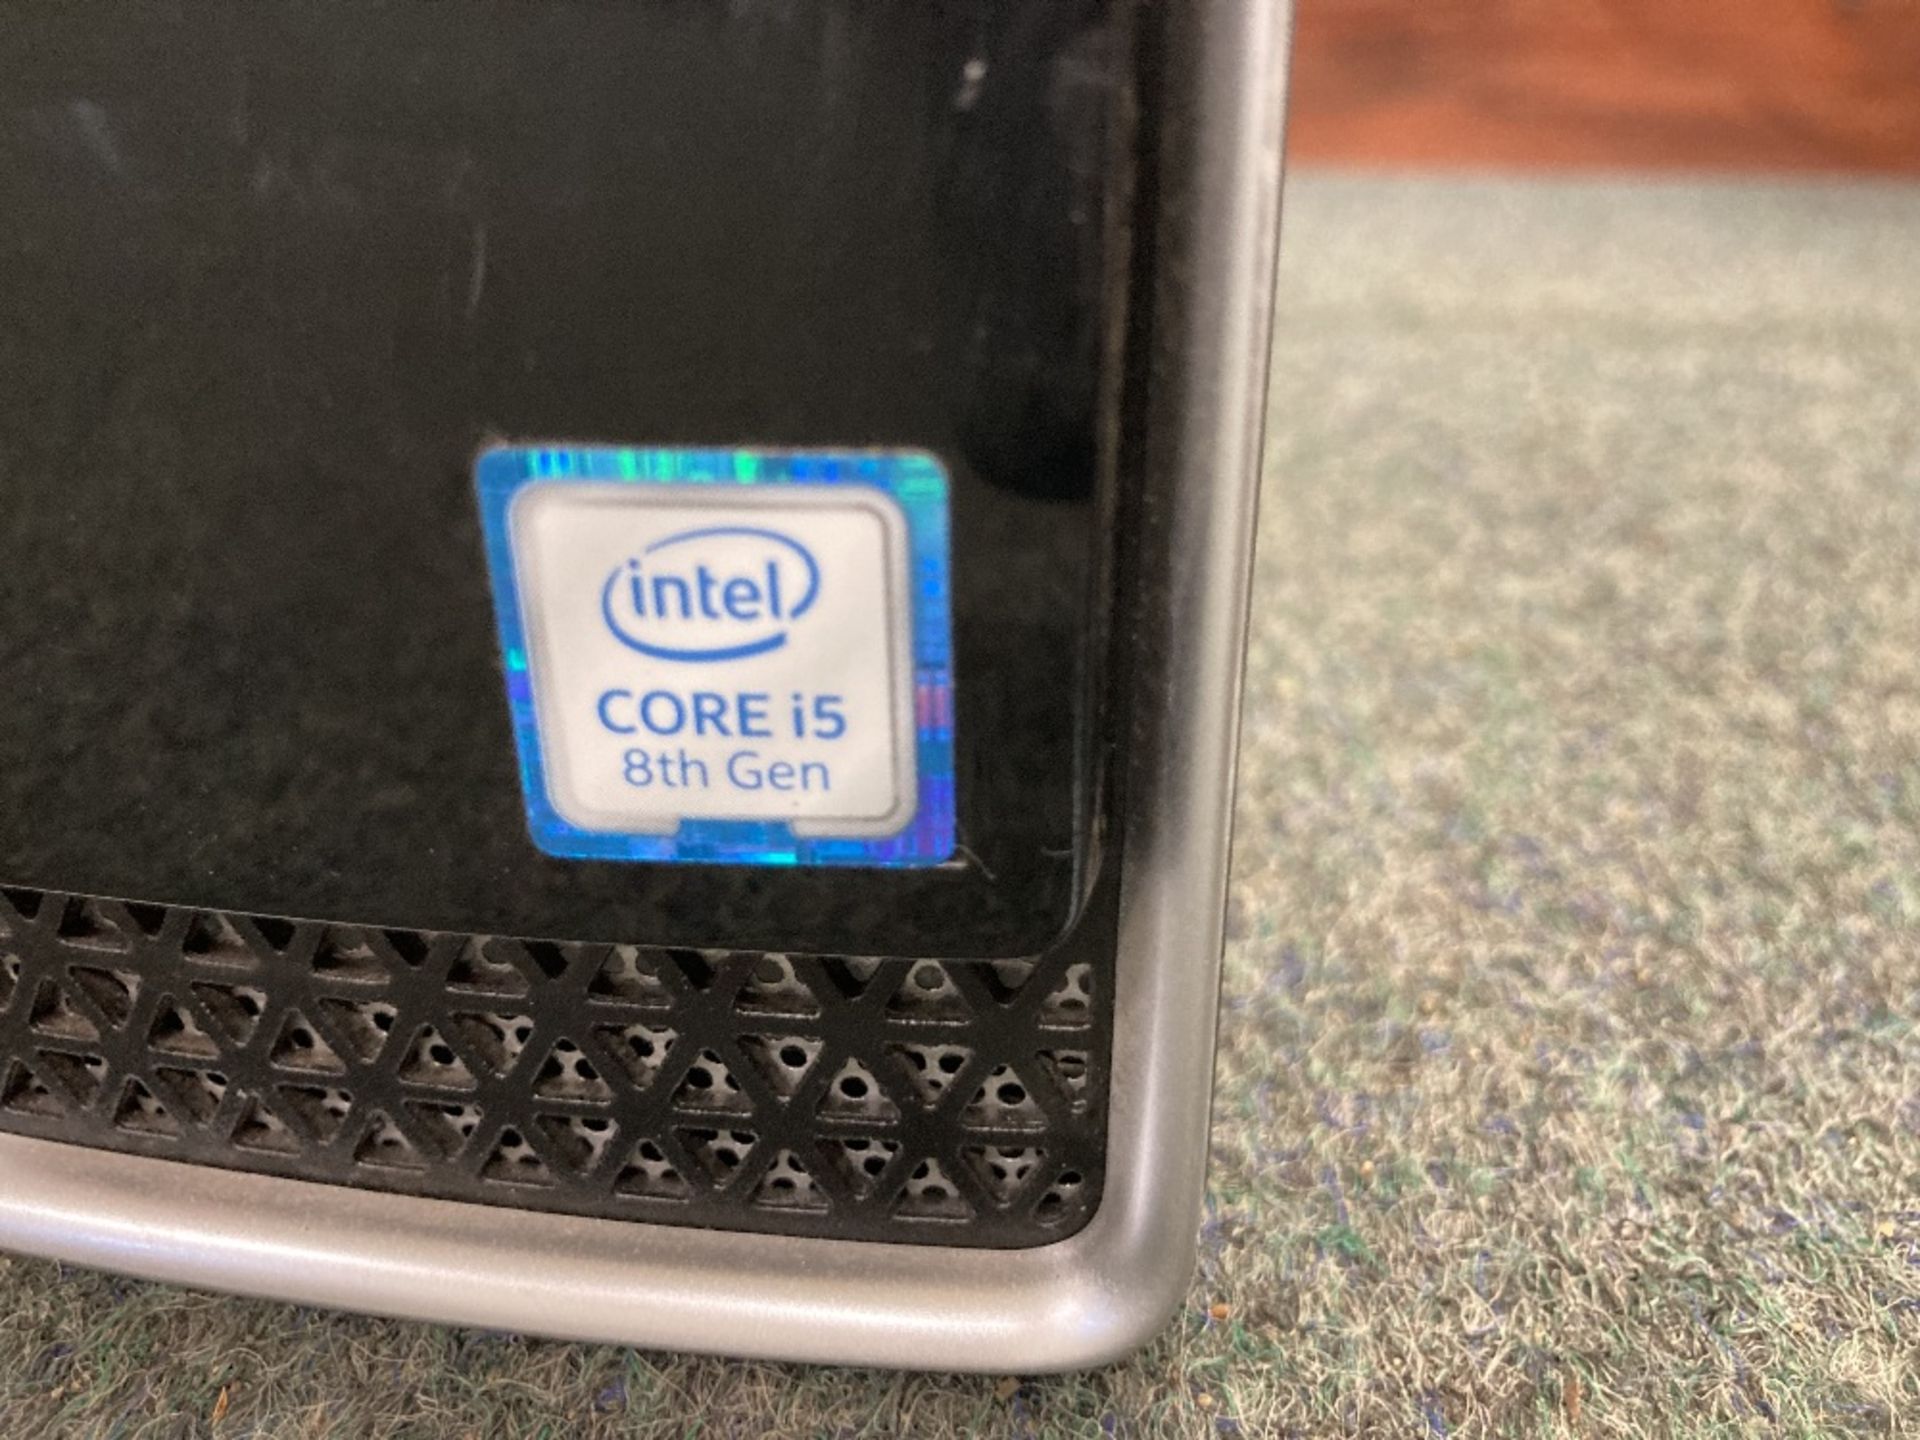 Dell Inspiron 3470 Core i5 8th Gen Personal Computer - Image 2 of 3